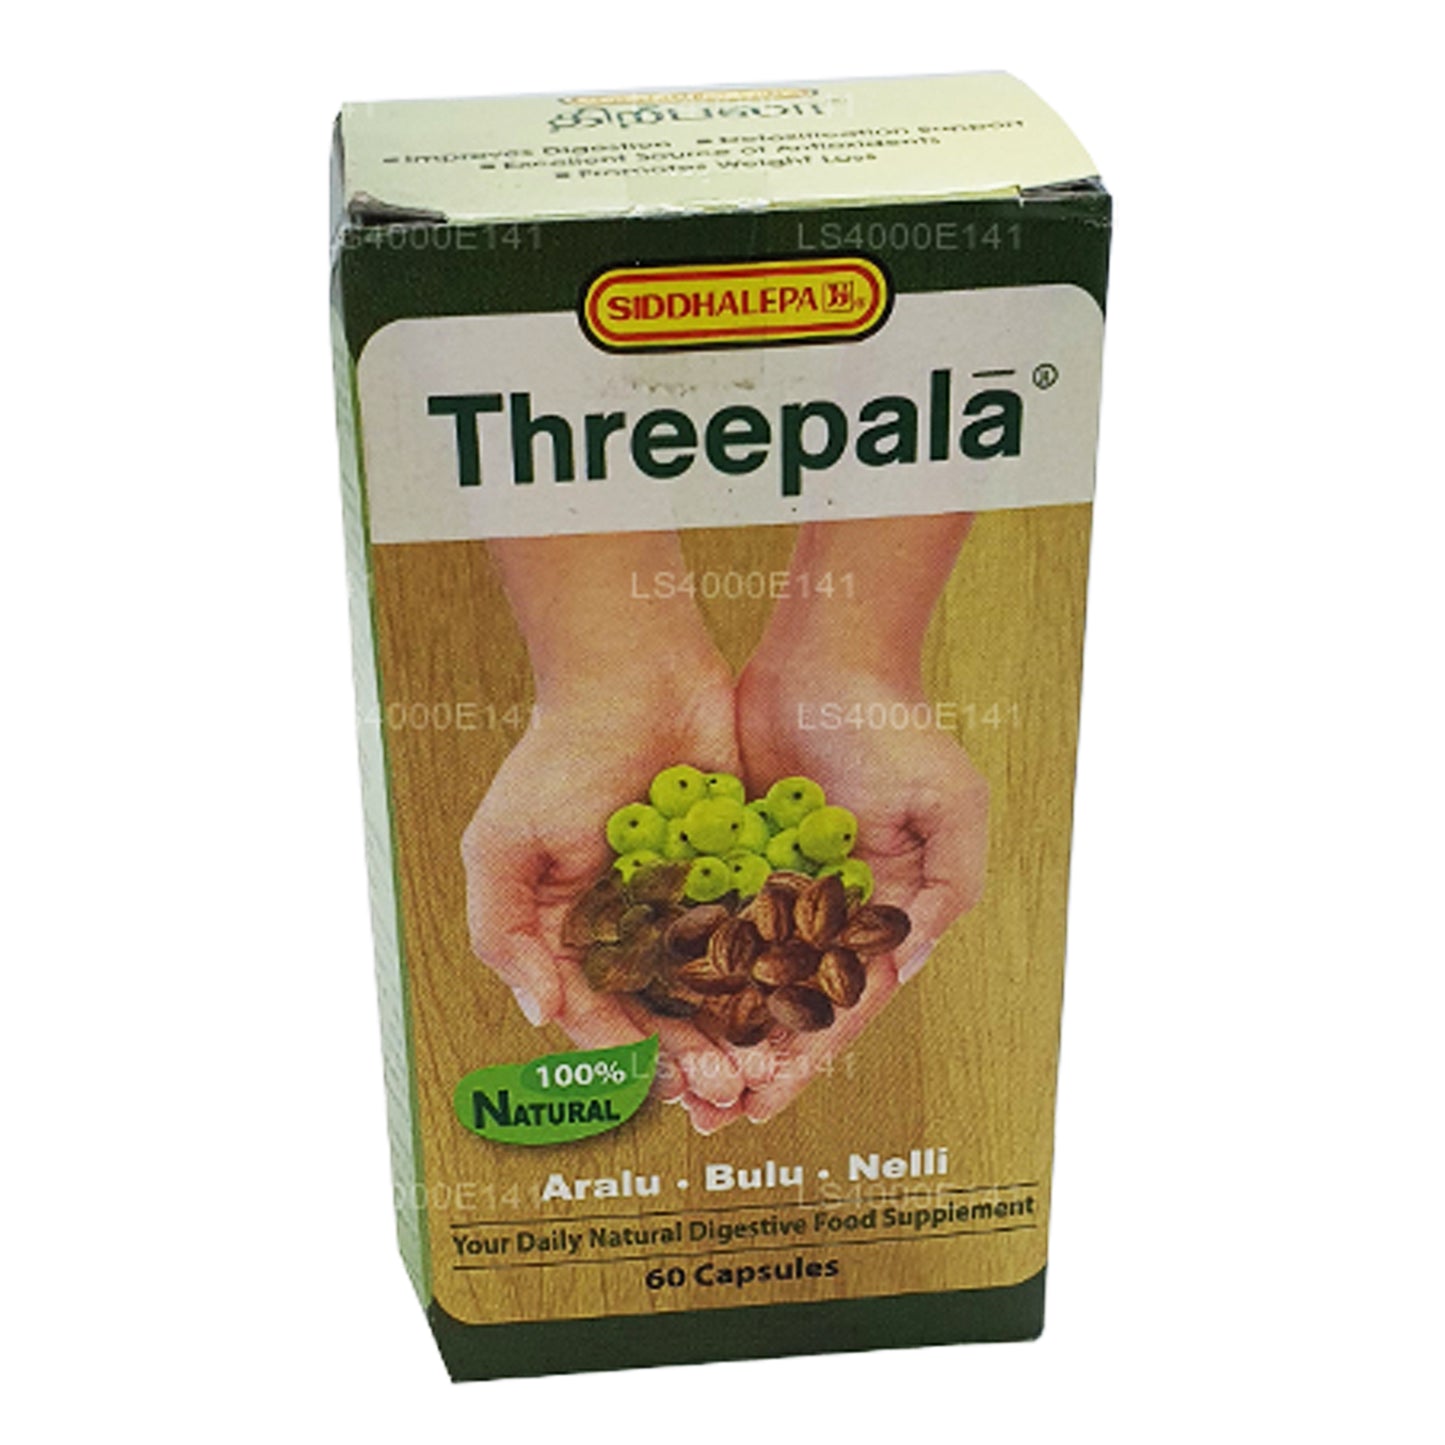 Siddhalepa Threepala（60 粒胶囊）